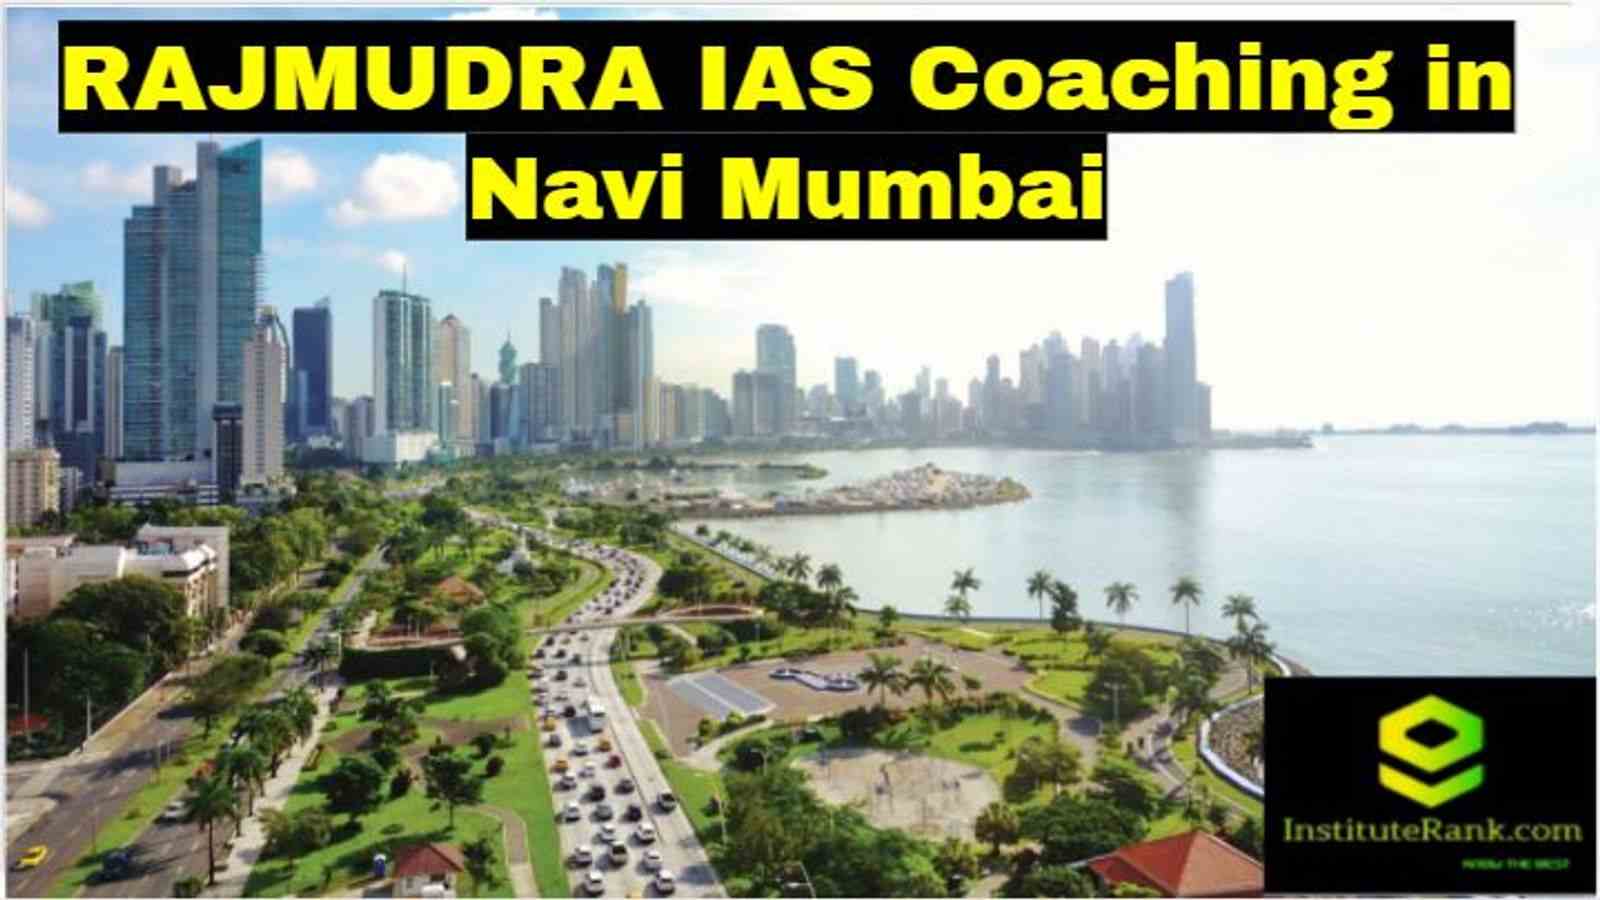 Rajmudra IAS Coaching in Navi Mumbai